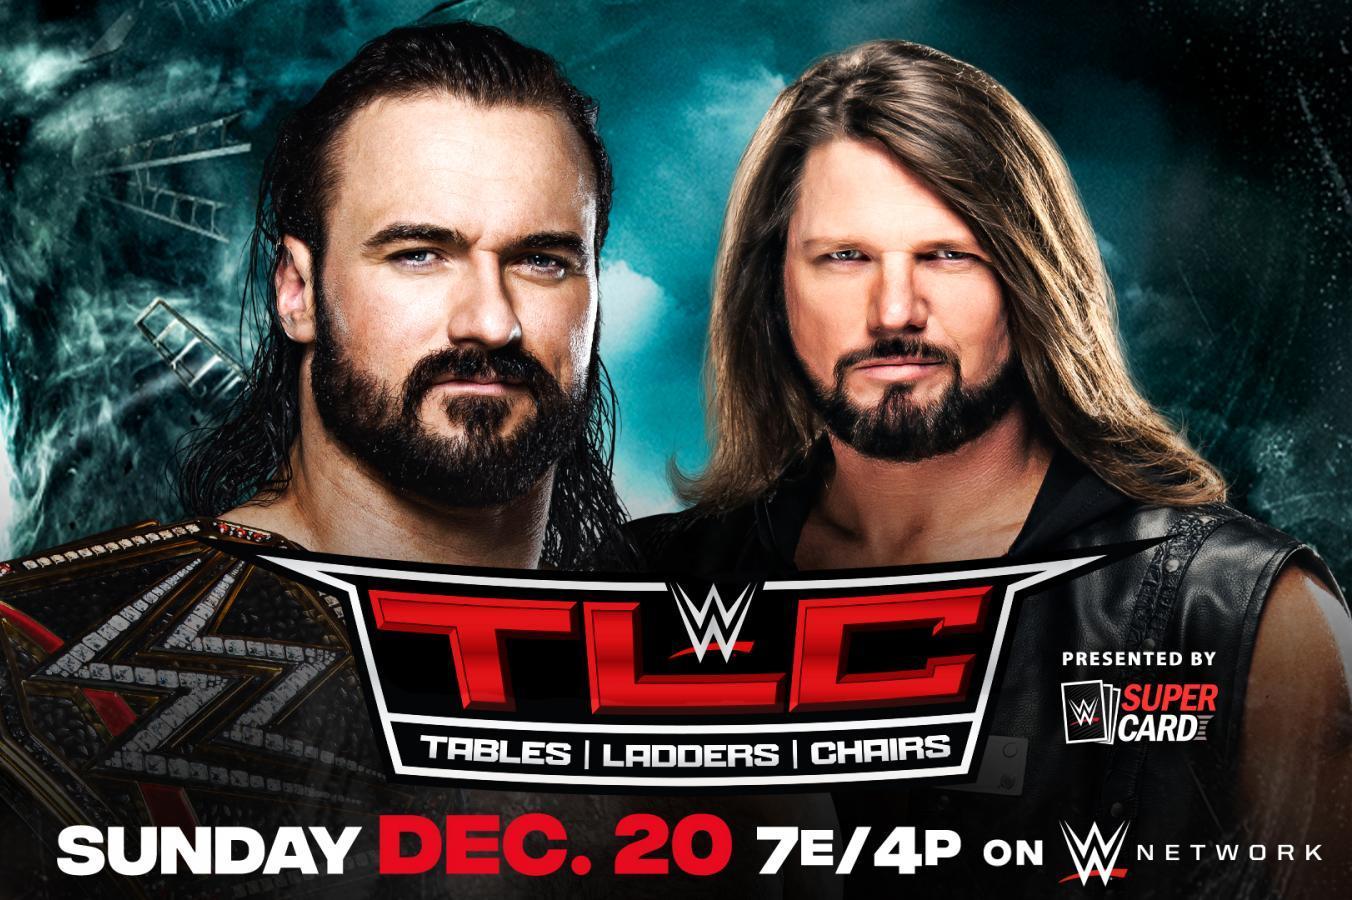 Drew McIntyre (c) vs. AJ Styles for the WWE Championship at WWE: TLC 2020